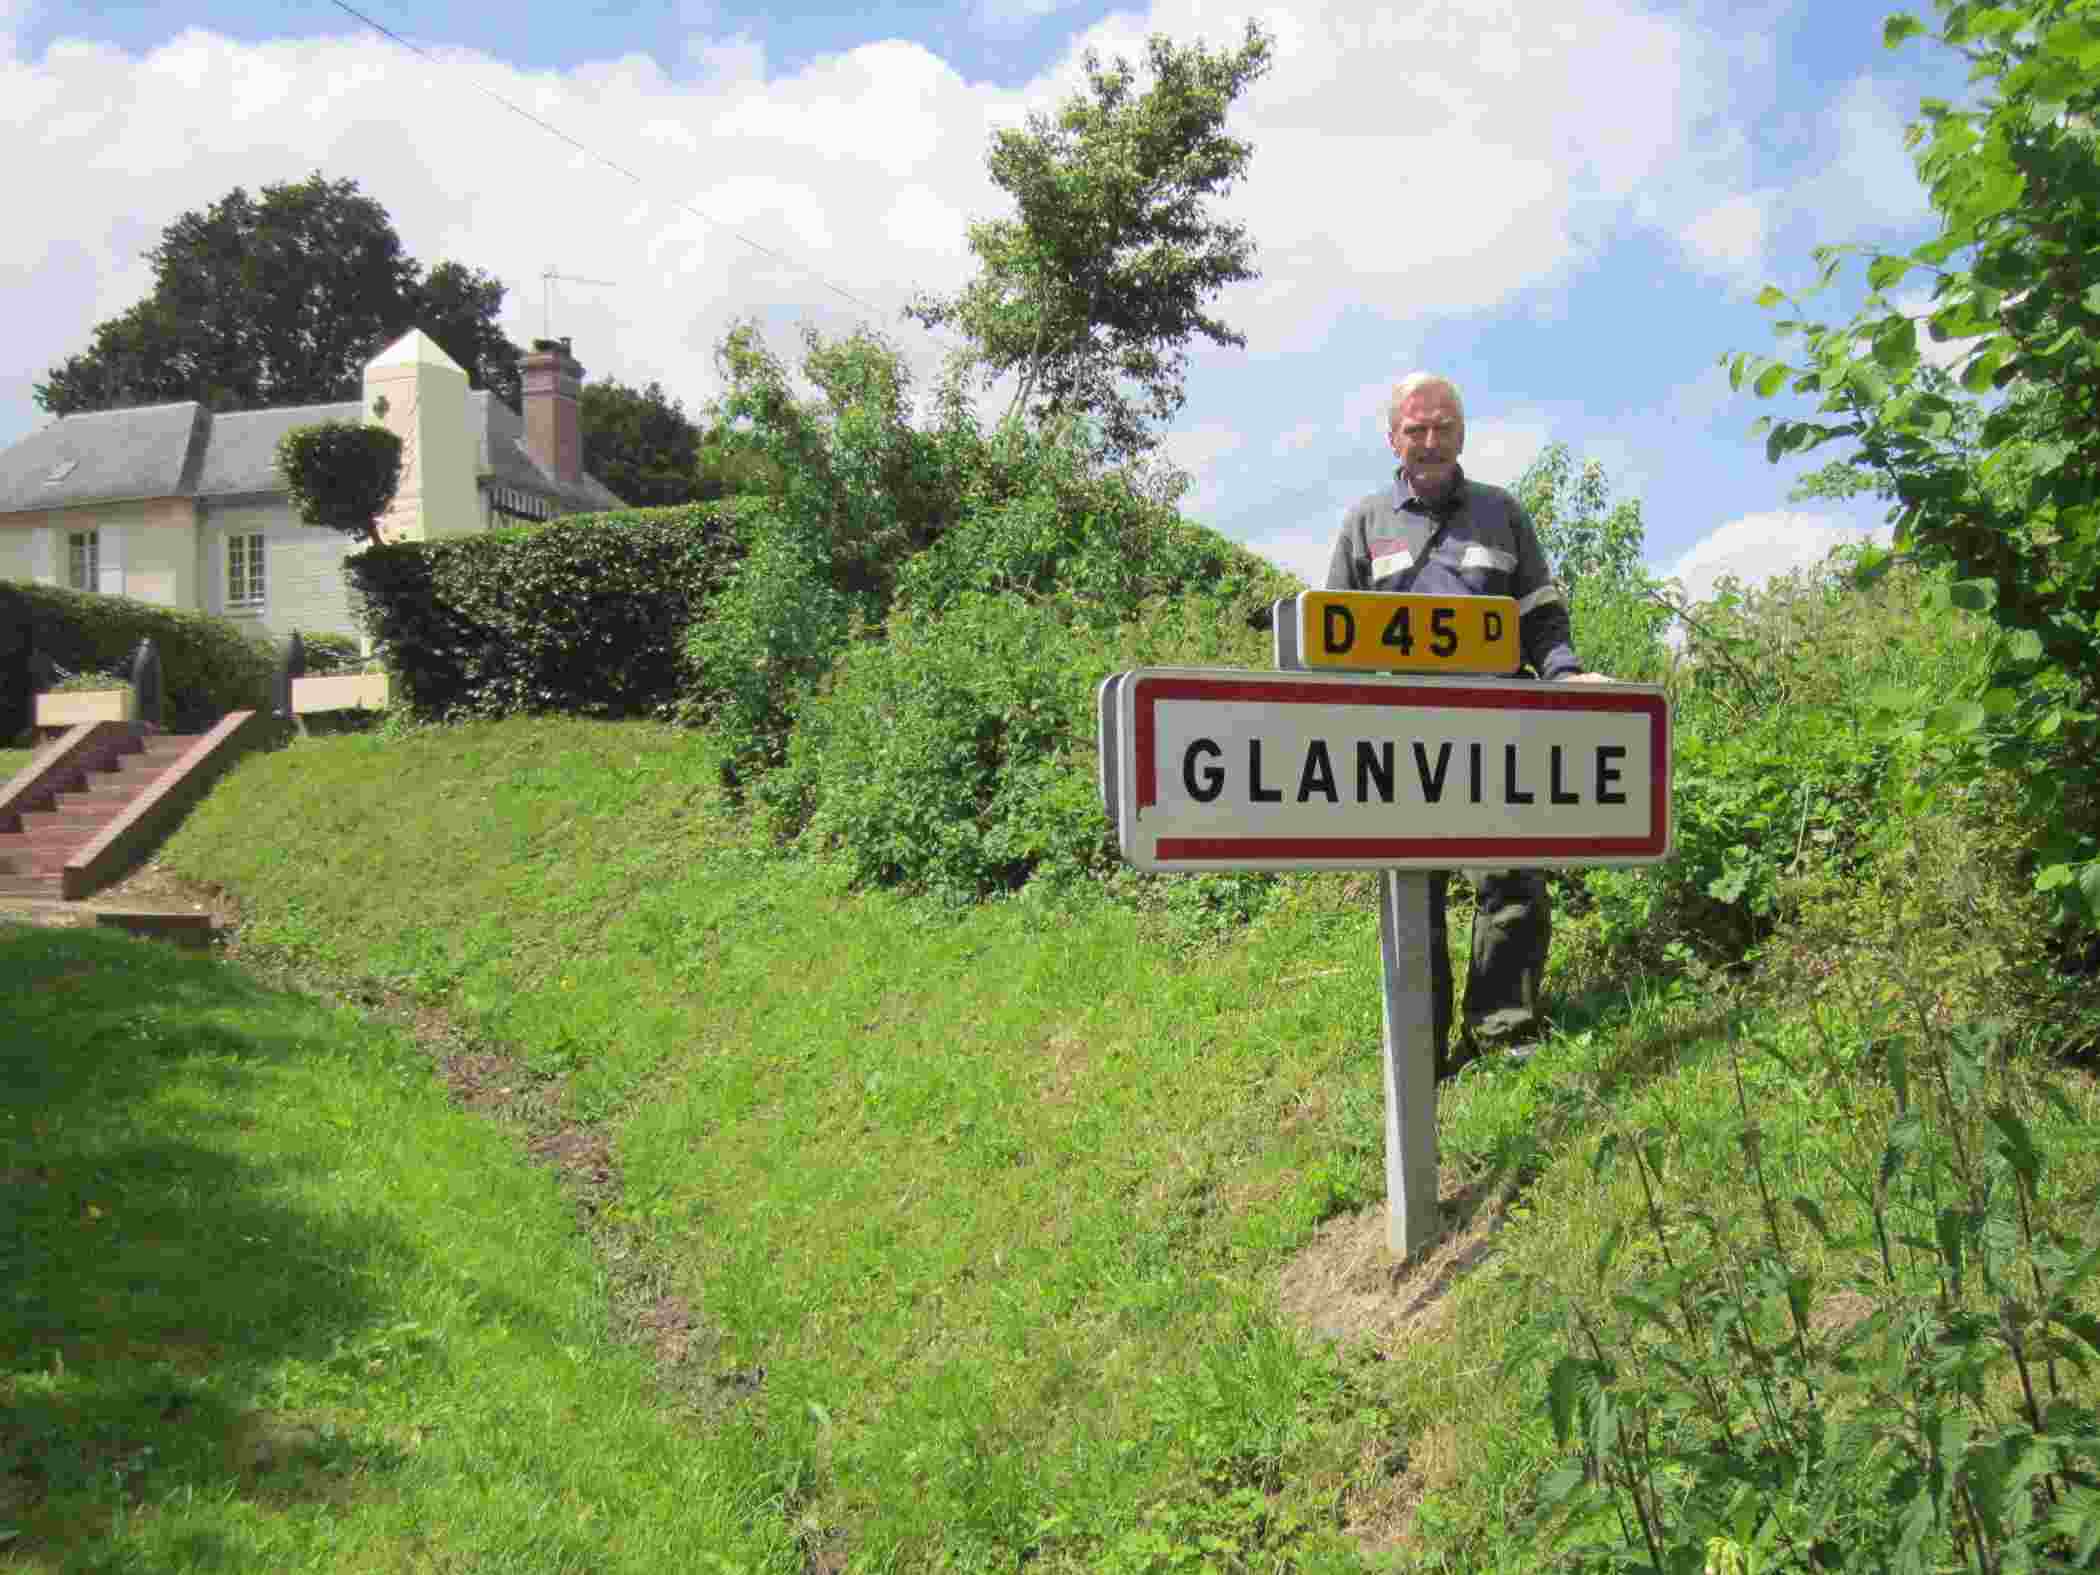 Eastern entrance to Glanville